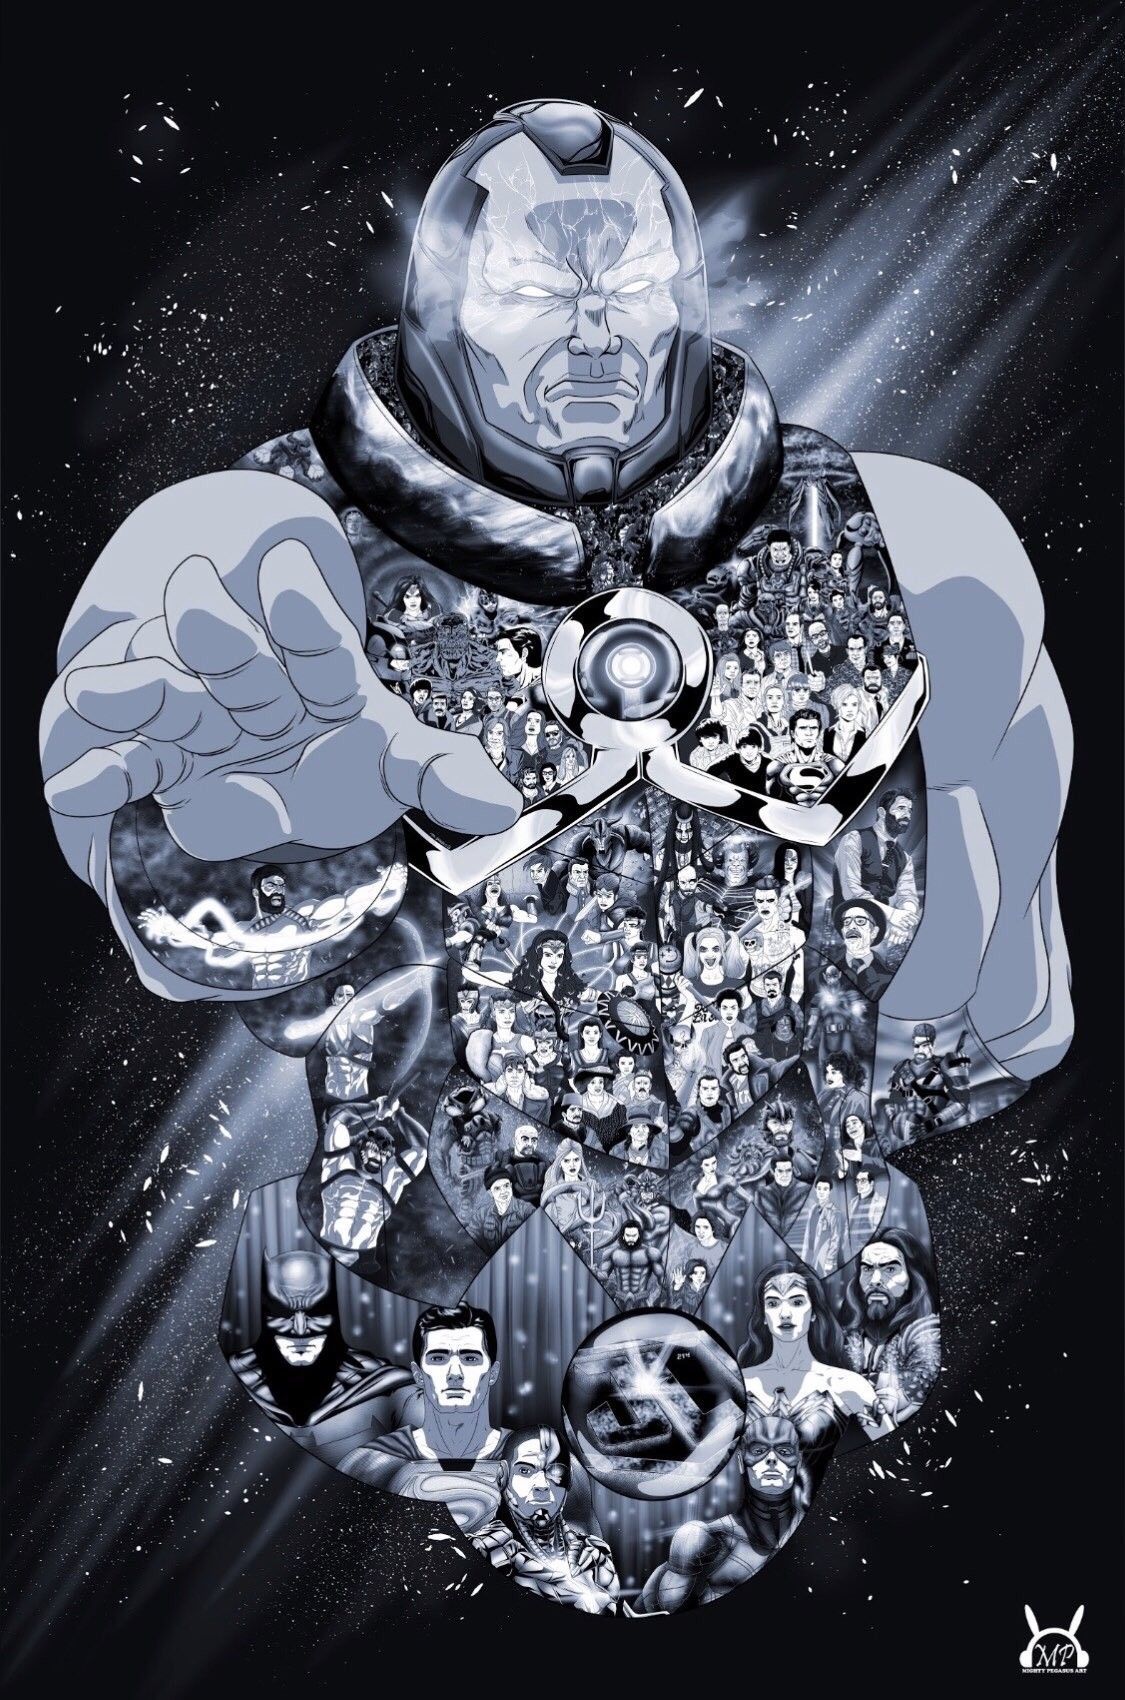 DC Extended Universe. Darkseid zack snyder, Justice league, Dc comics wallpaper